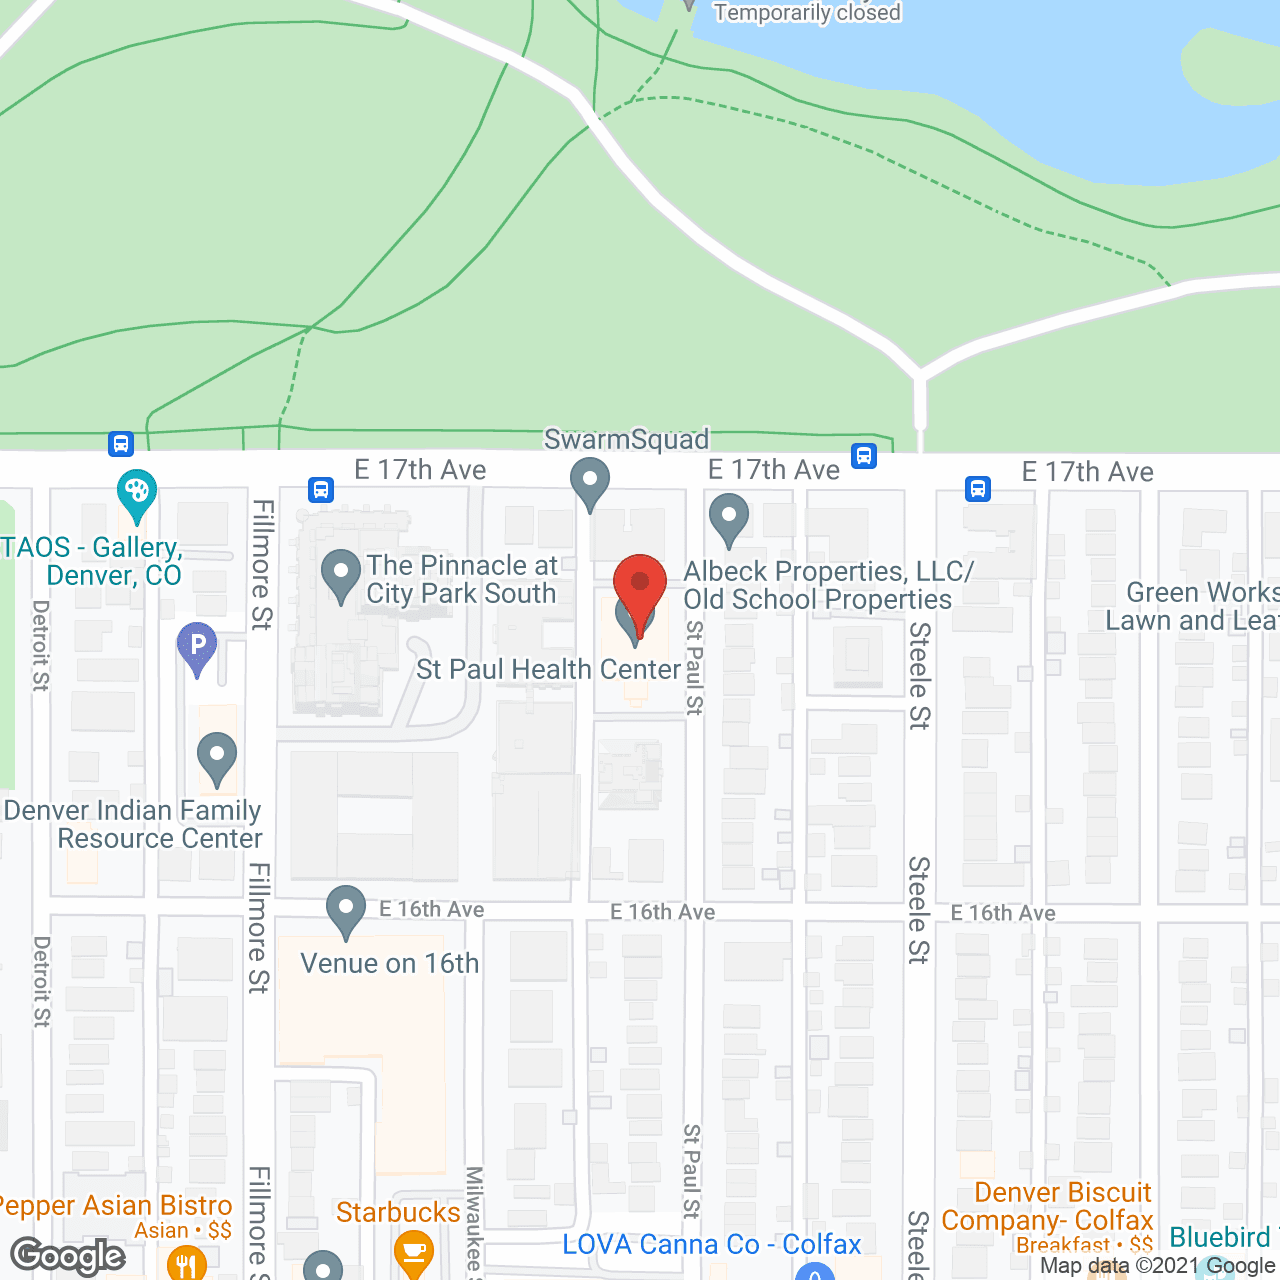 St Paul Health Center in google map